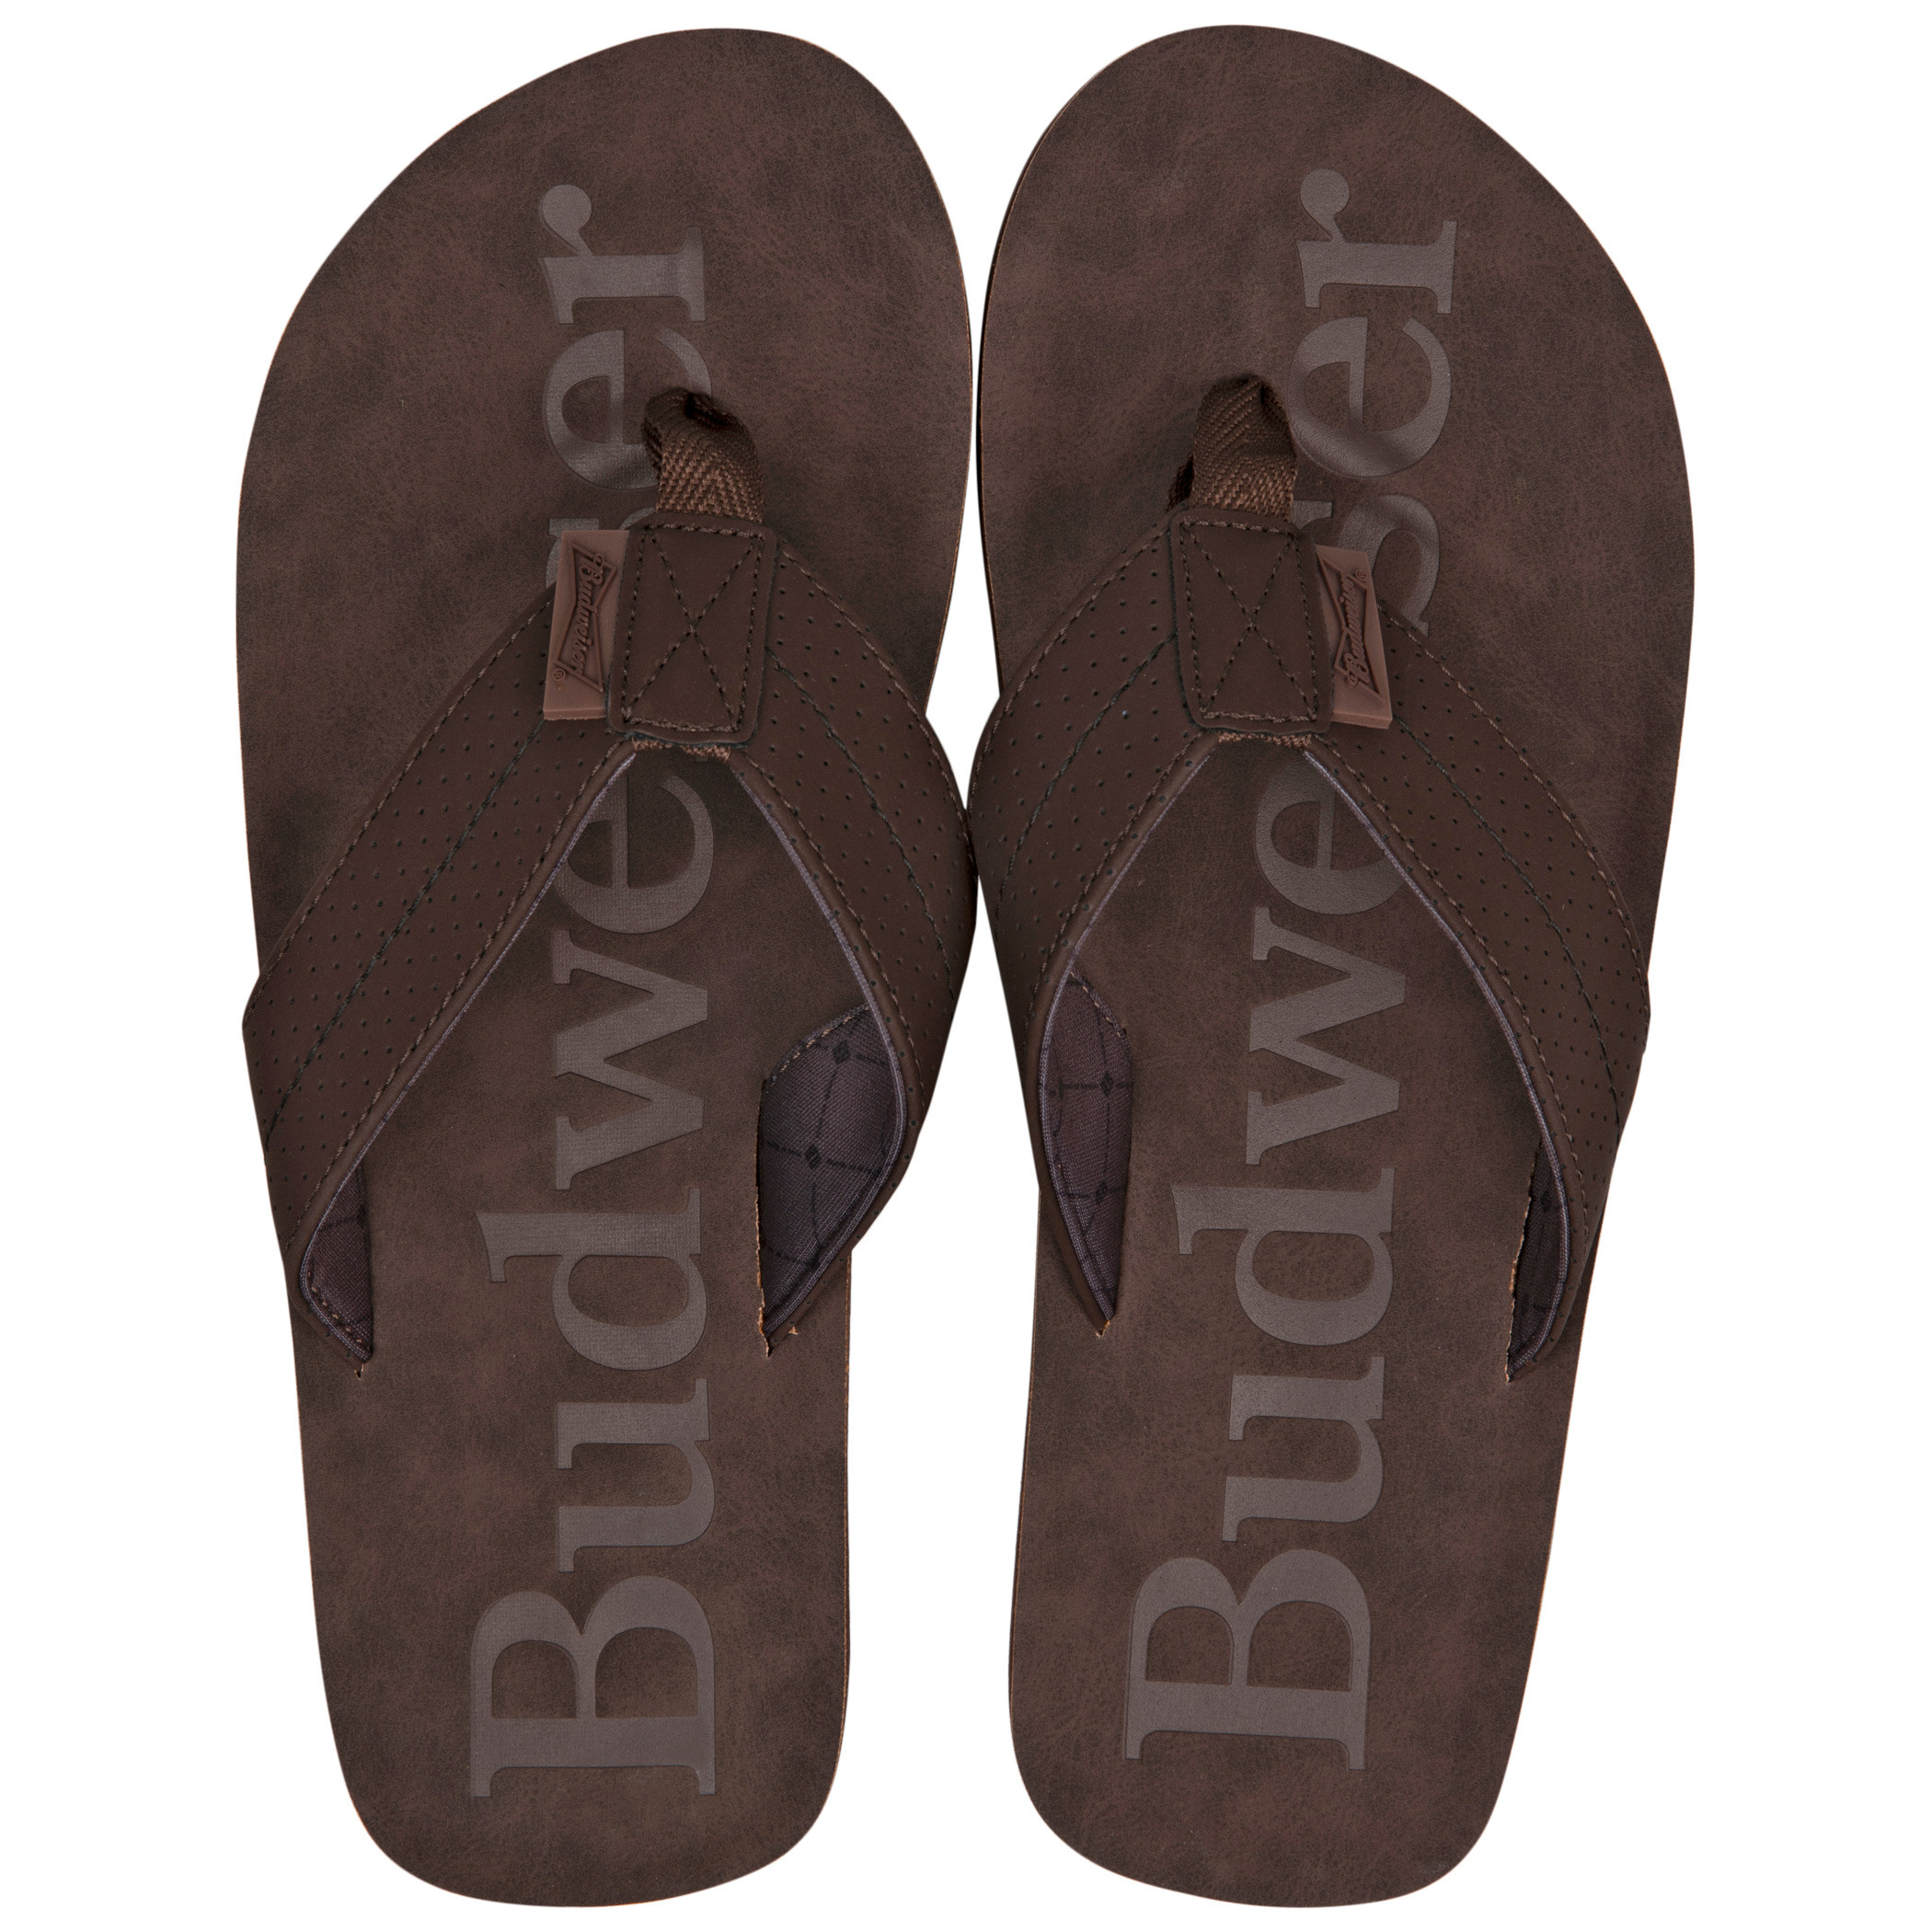 Budweiser Printed Brown Distressed Flip Flop Sandals